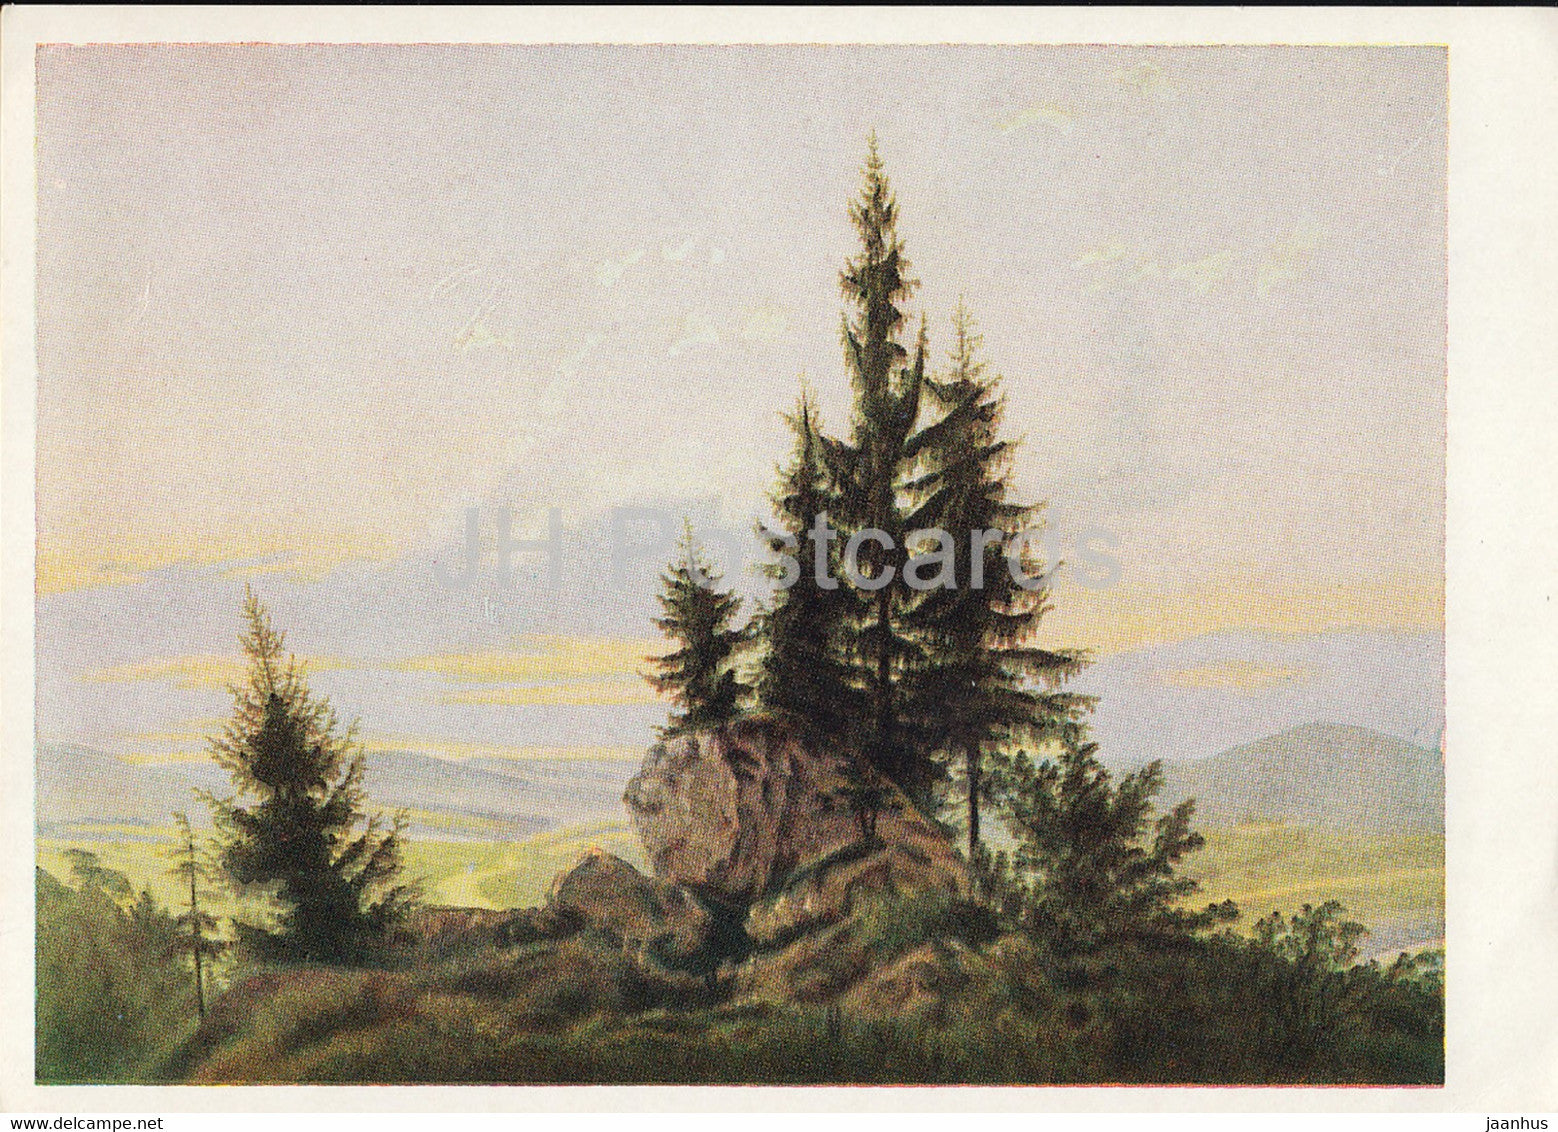 painting by Caspar David Friedrich - Ausblick in Elbtal - German art - Germany - used - JH Postcards